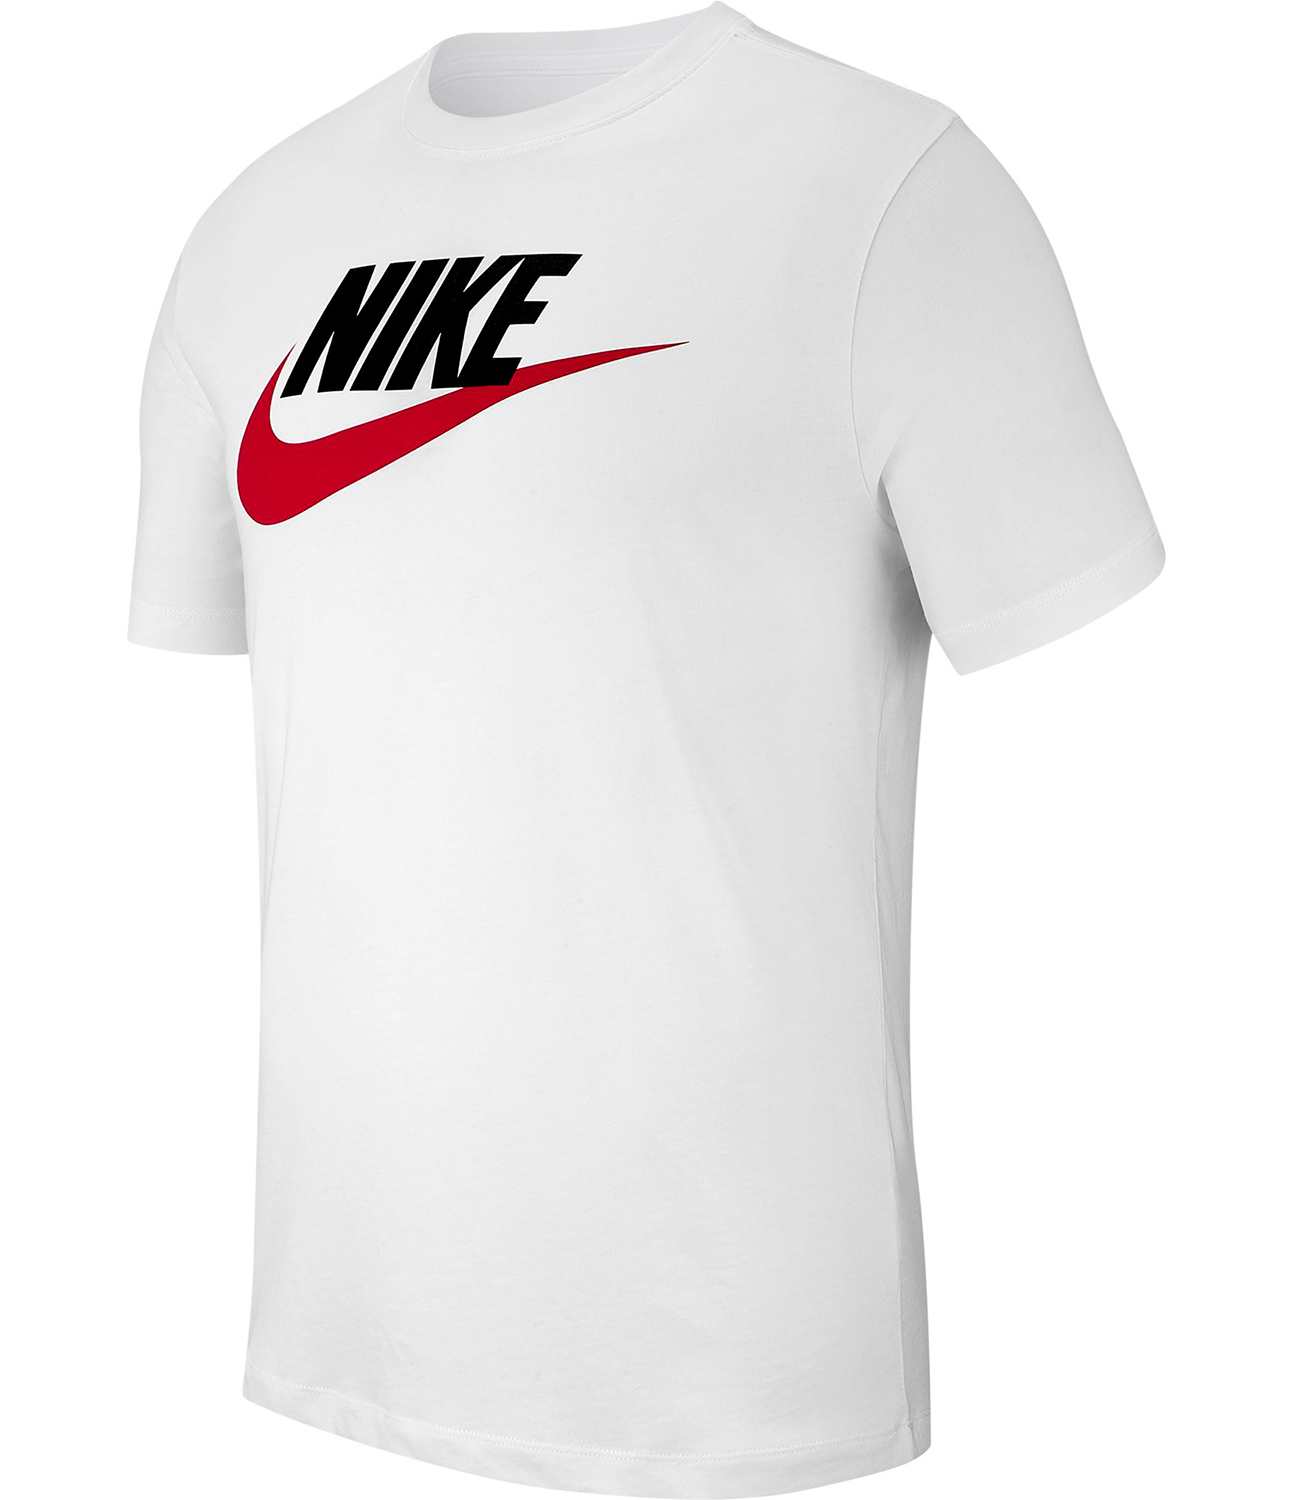 Nike T-Shirt White Black University Red 21122